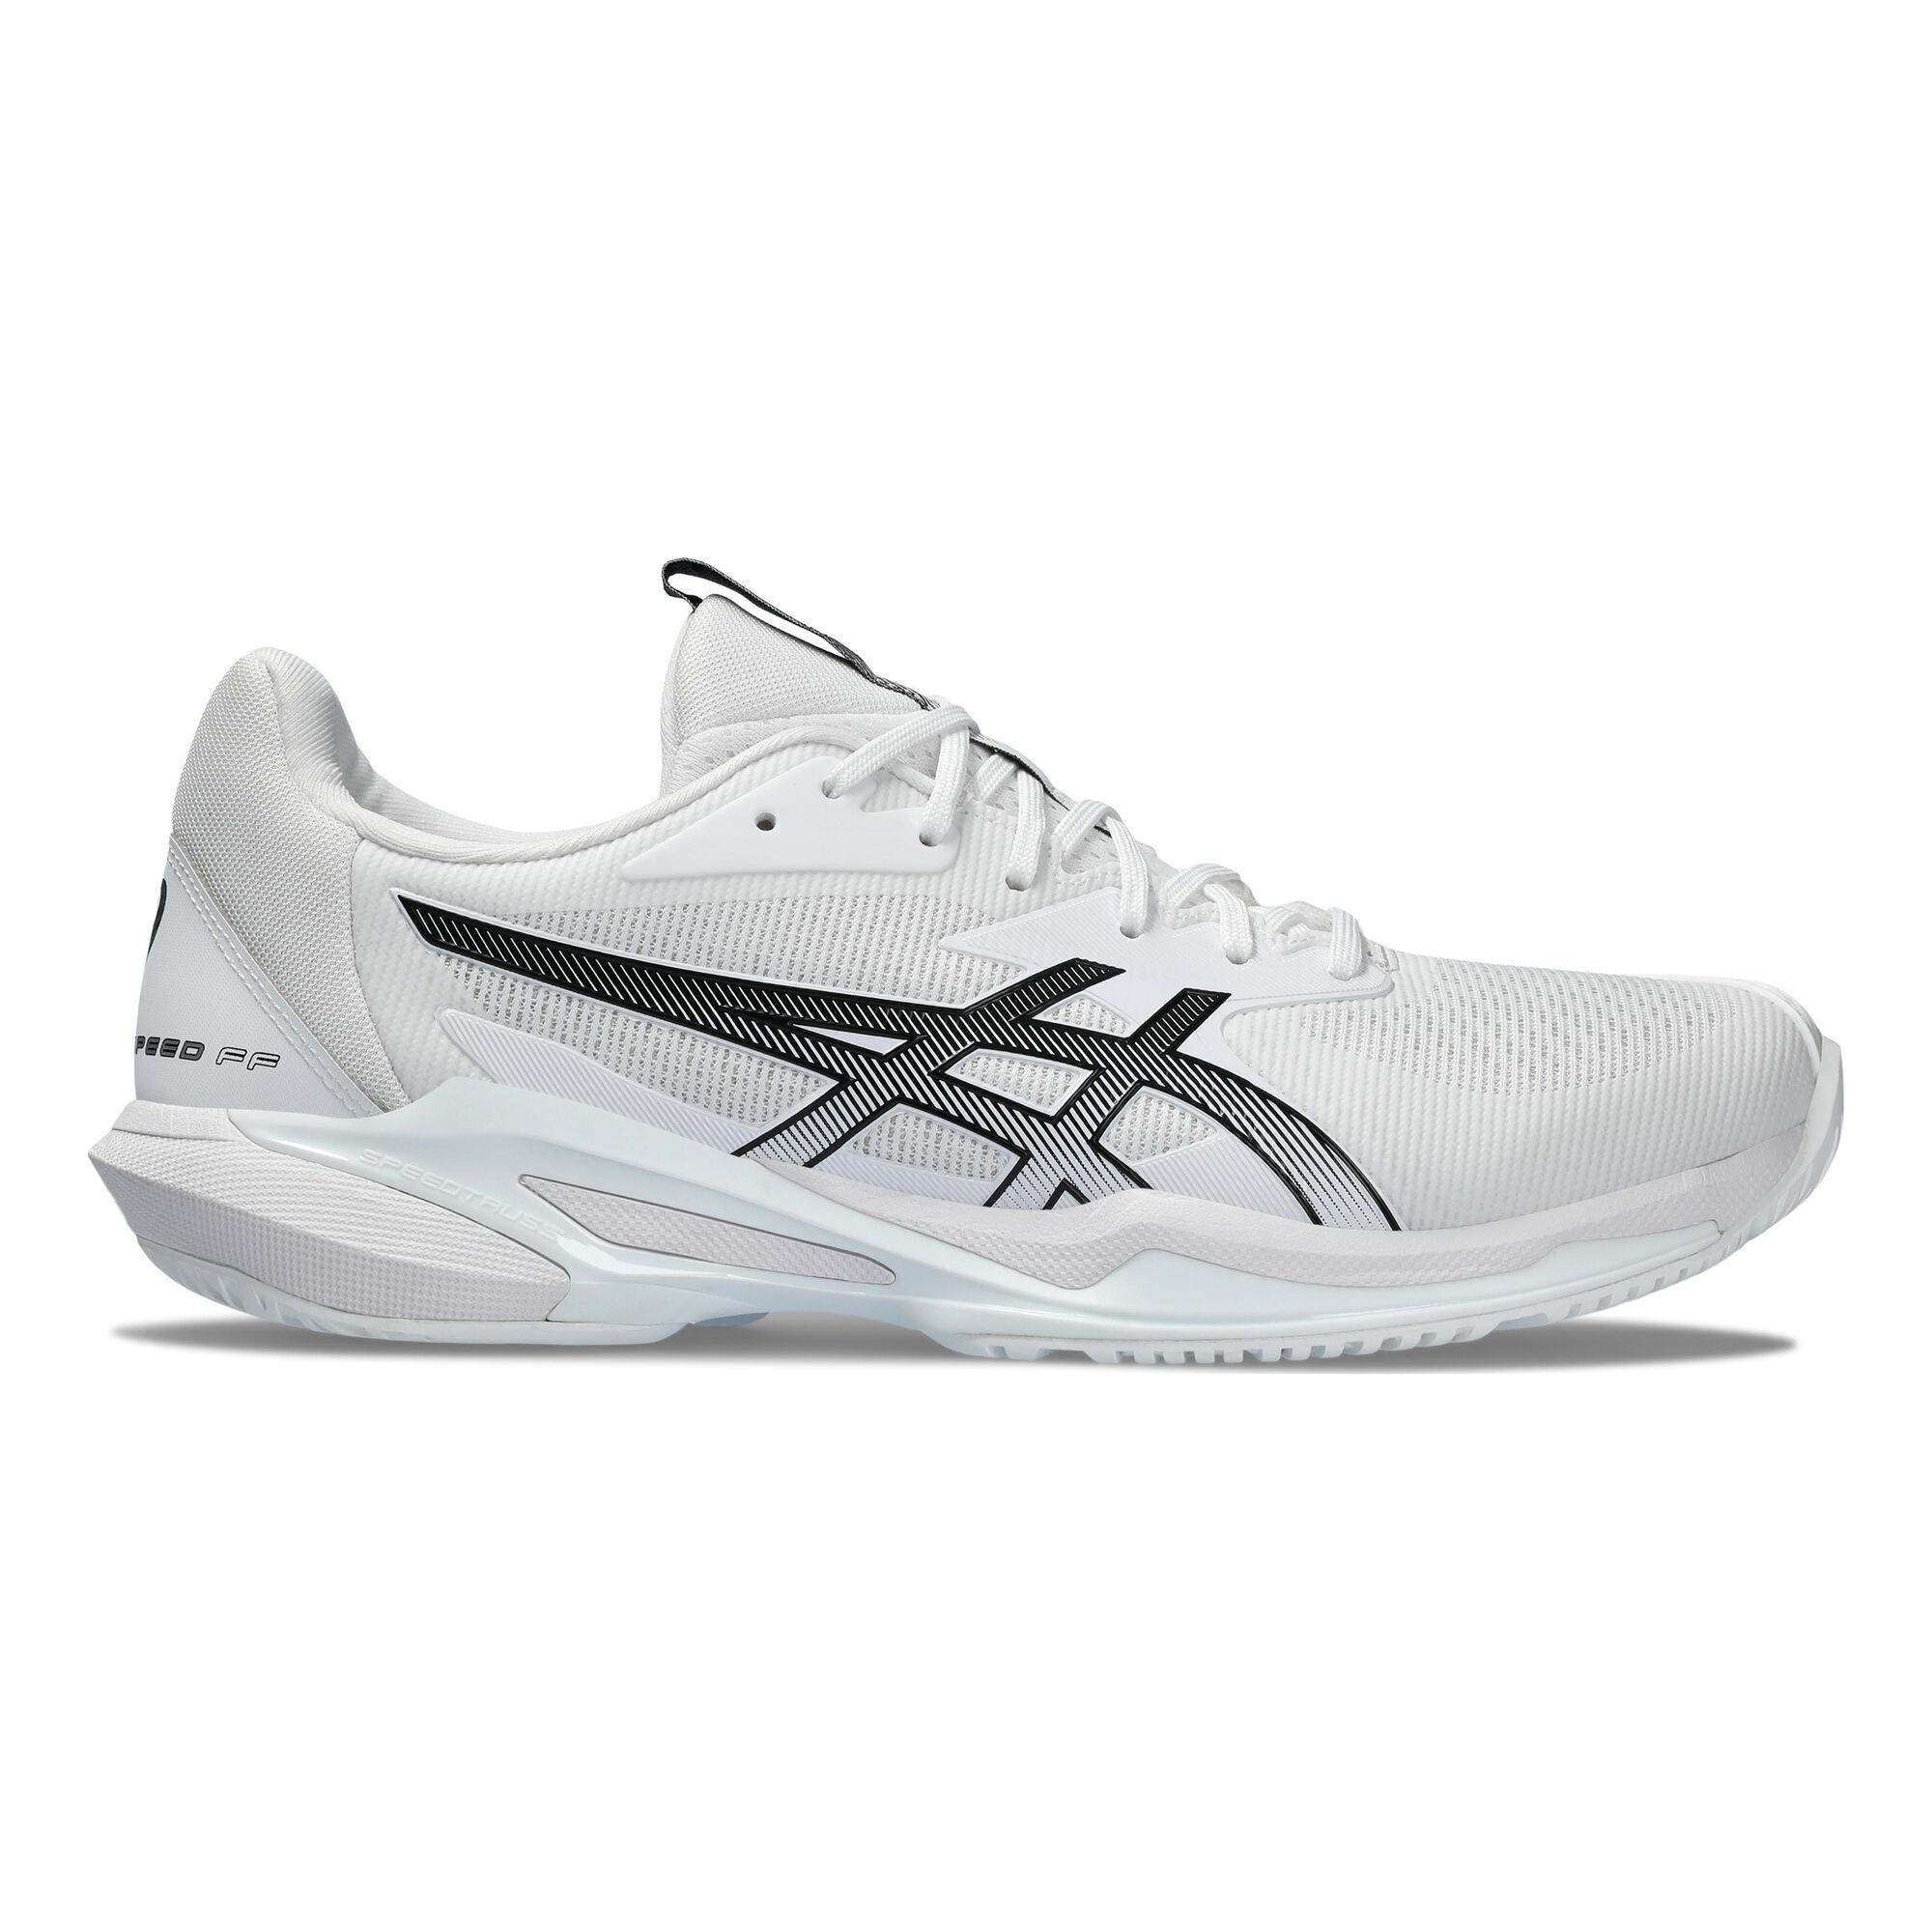 Buy ASICS Solution Speed FF 3 AC All Court Shoe Men White, Black online |  Tennis Point COM